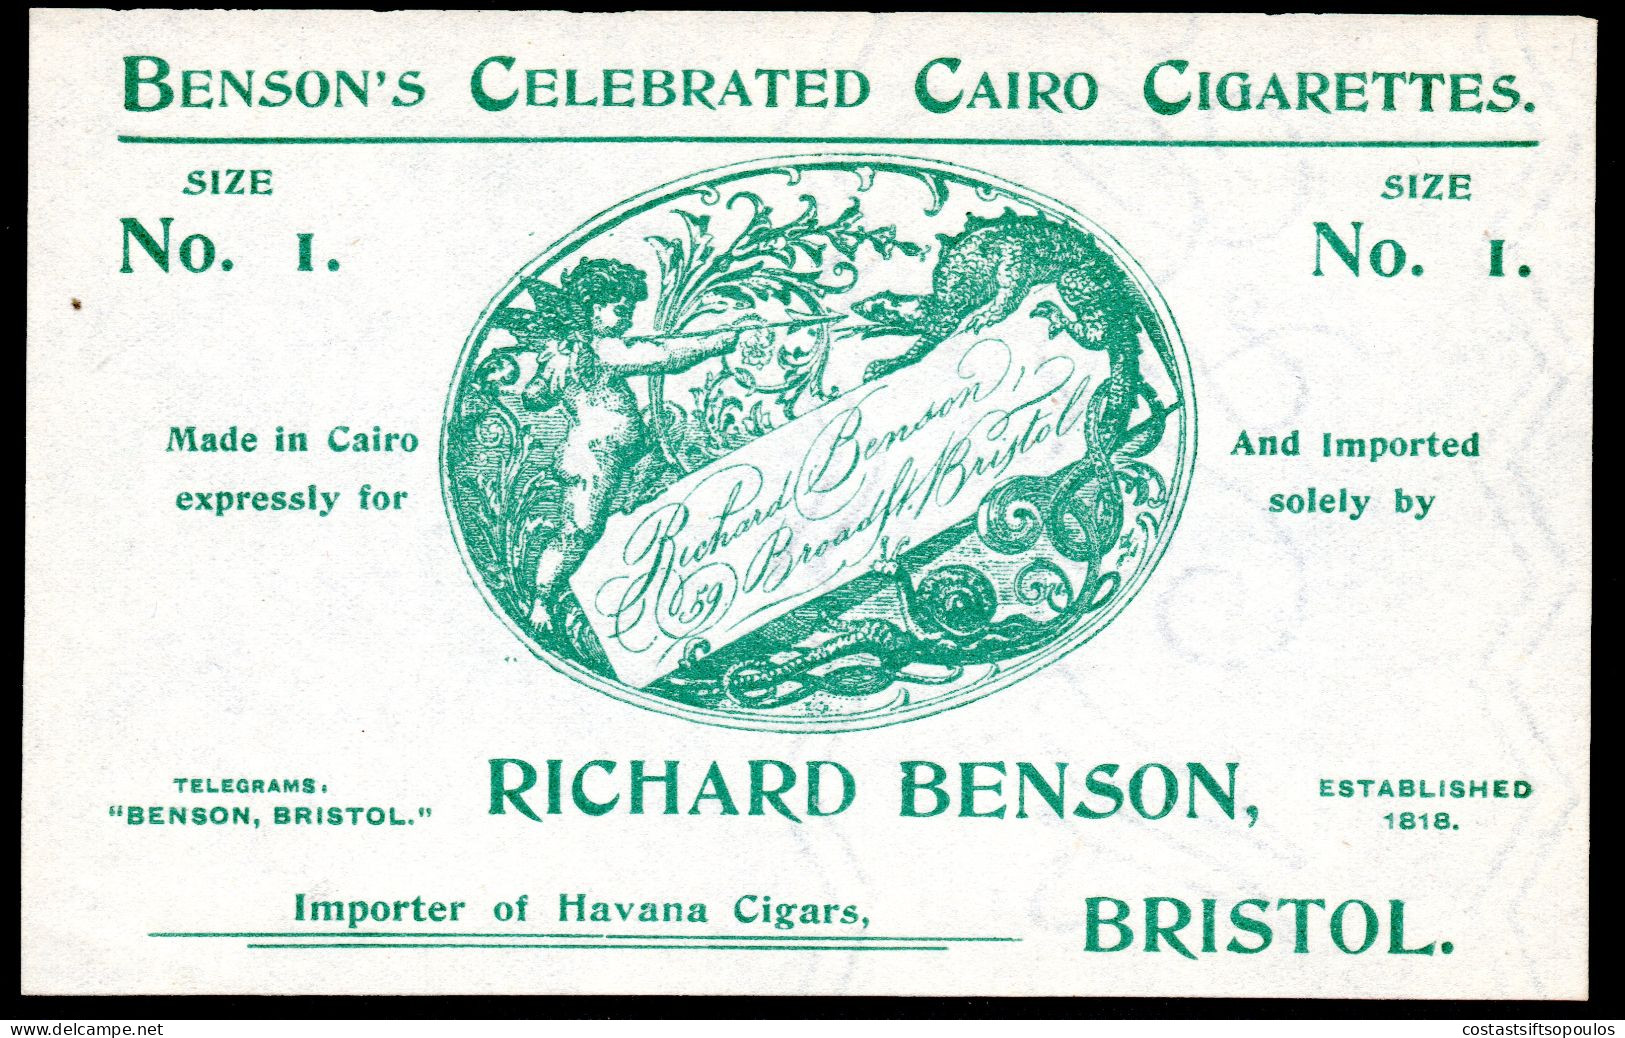 1619.BENSON'S BRISTOL CELEBRATED CAIRO CIGARETTES ADV. PRINT(WATERMARK), SIZE 13.1 X 8.2 Cm. - Advertising Items